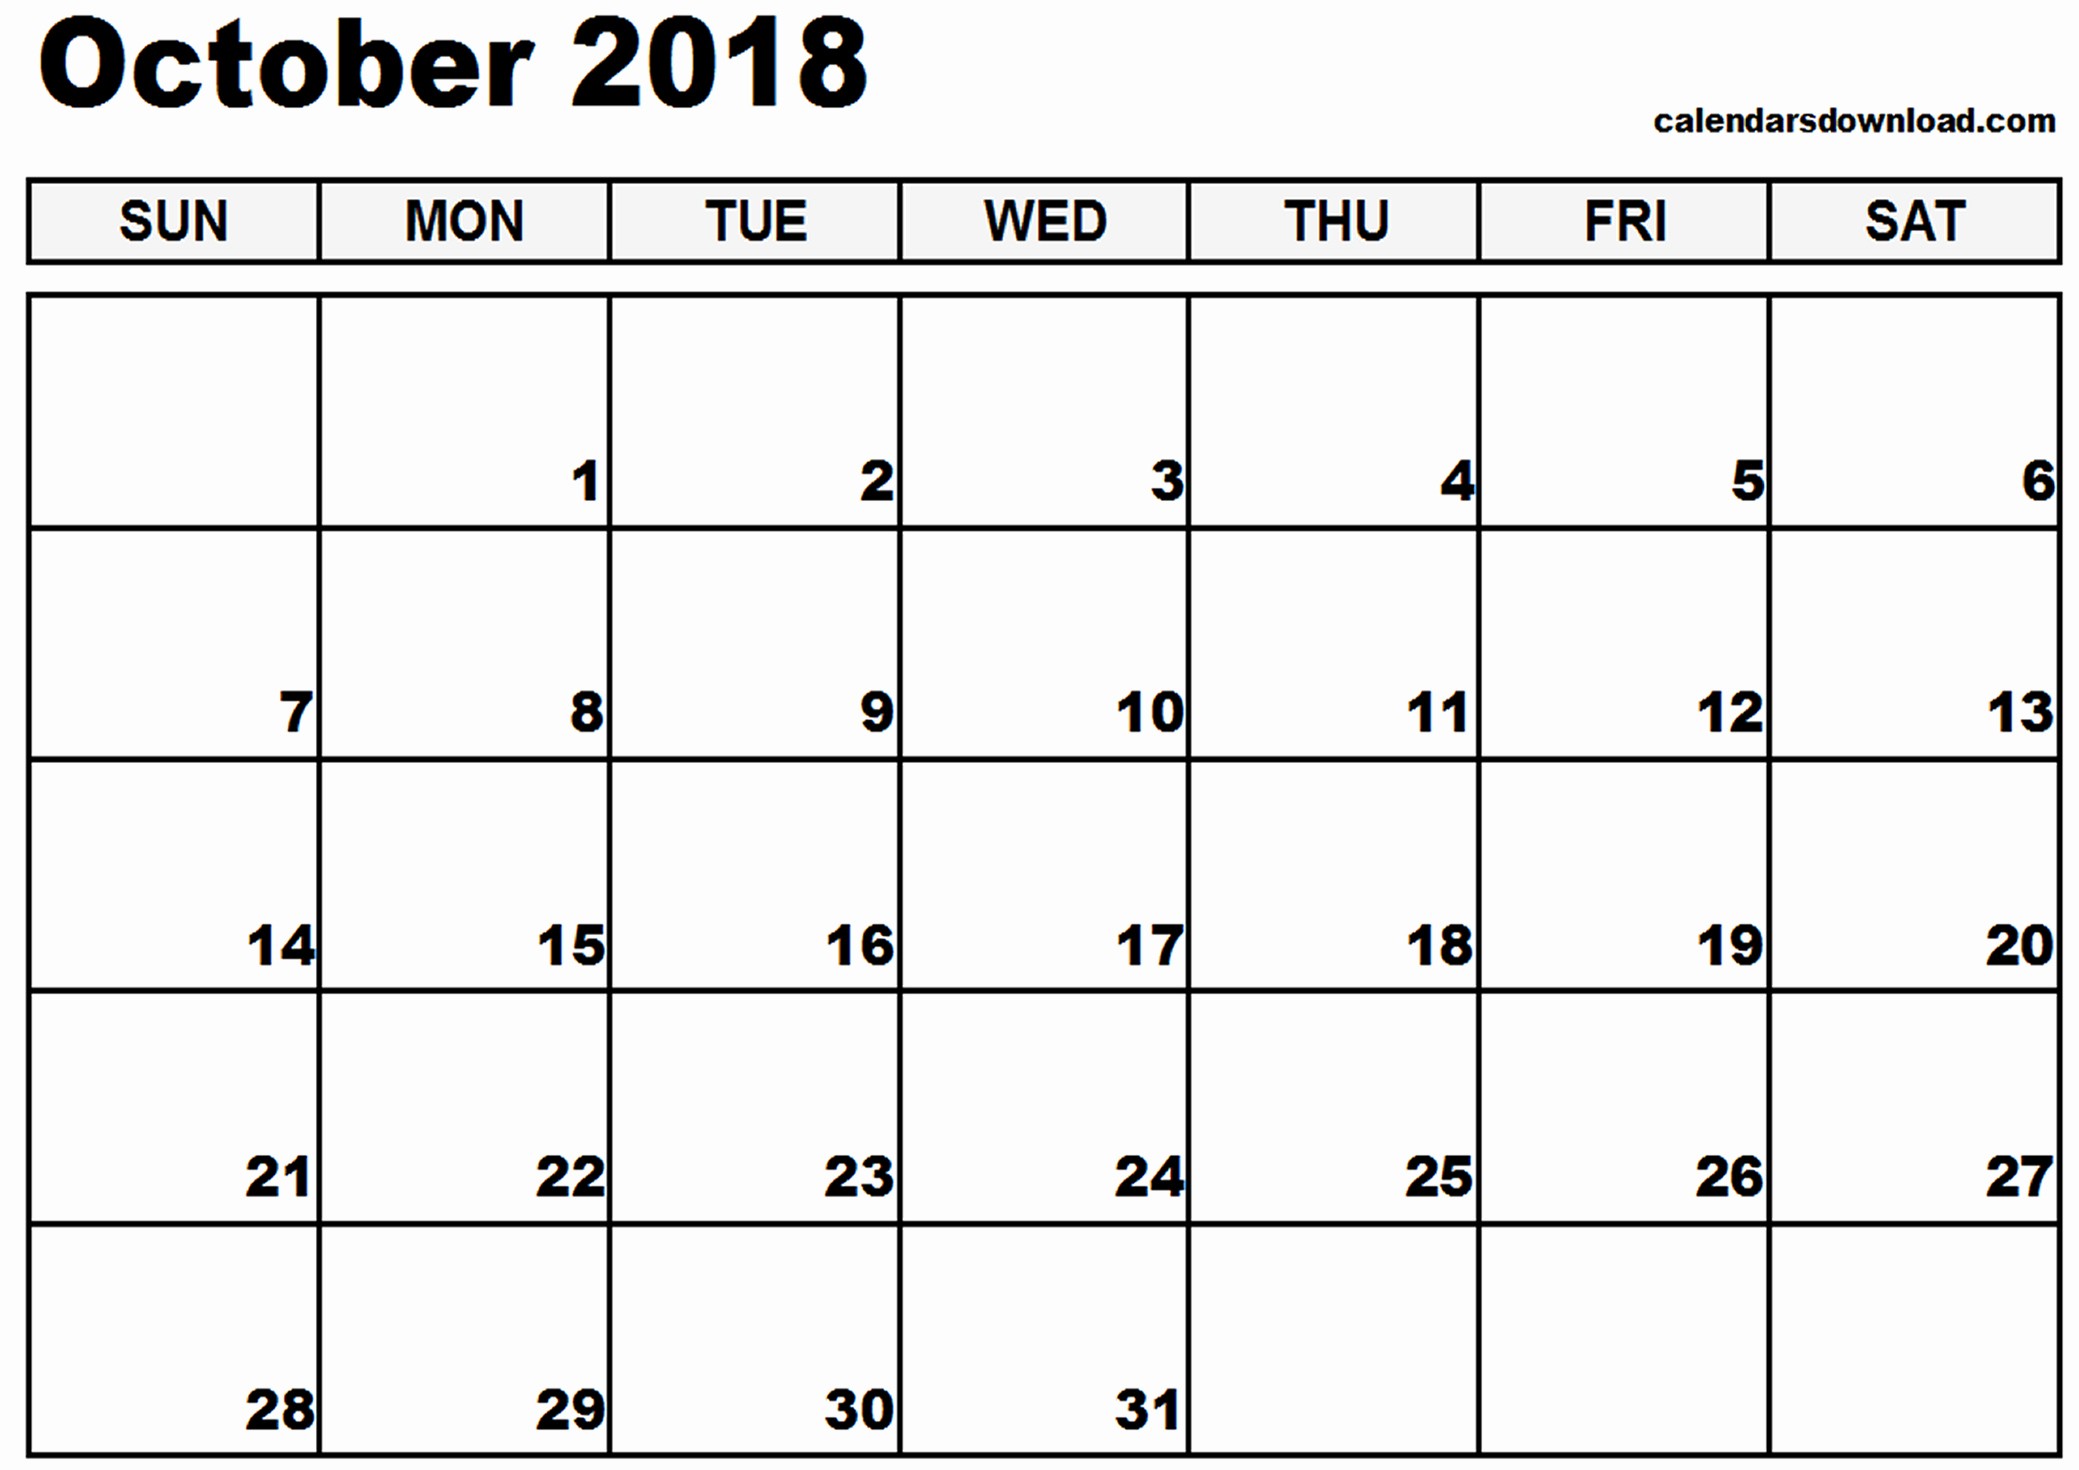 October 2018 Printable Calendar Word Luxury October 2018 Printable Calendar